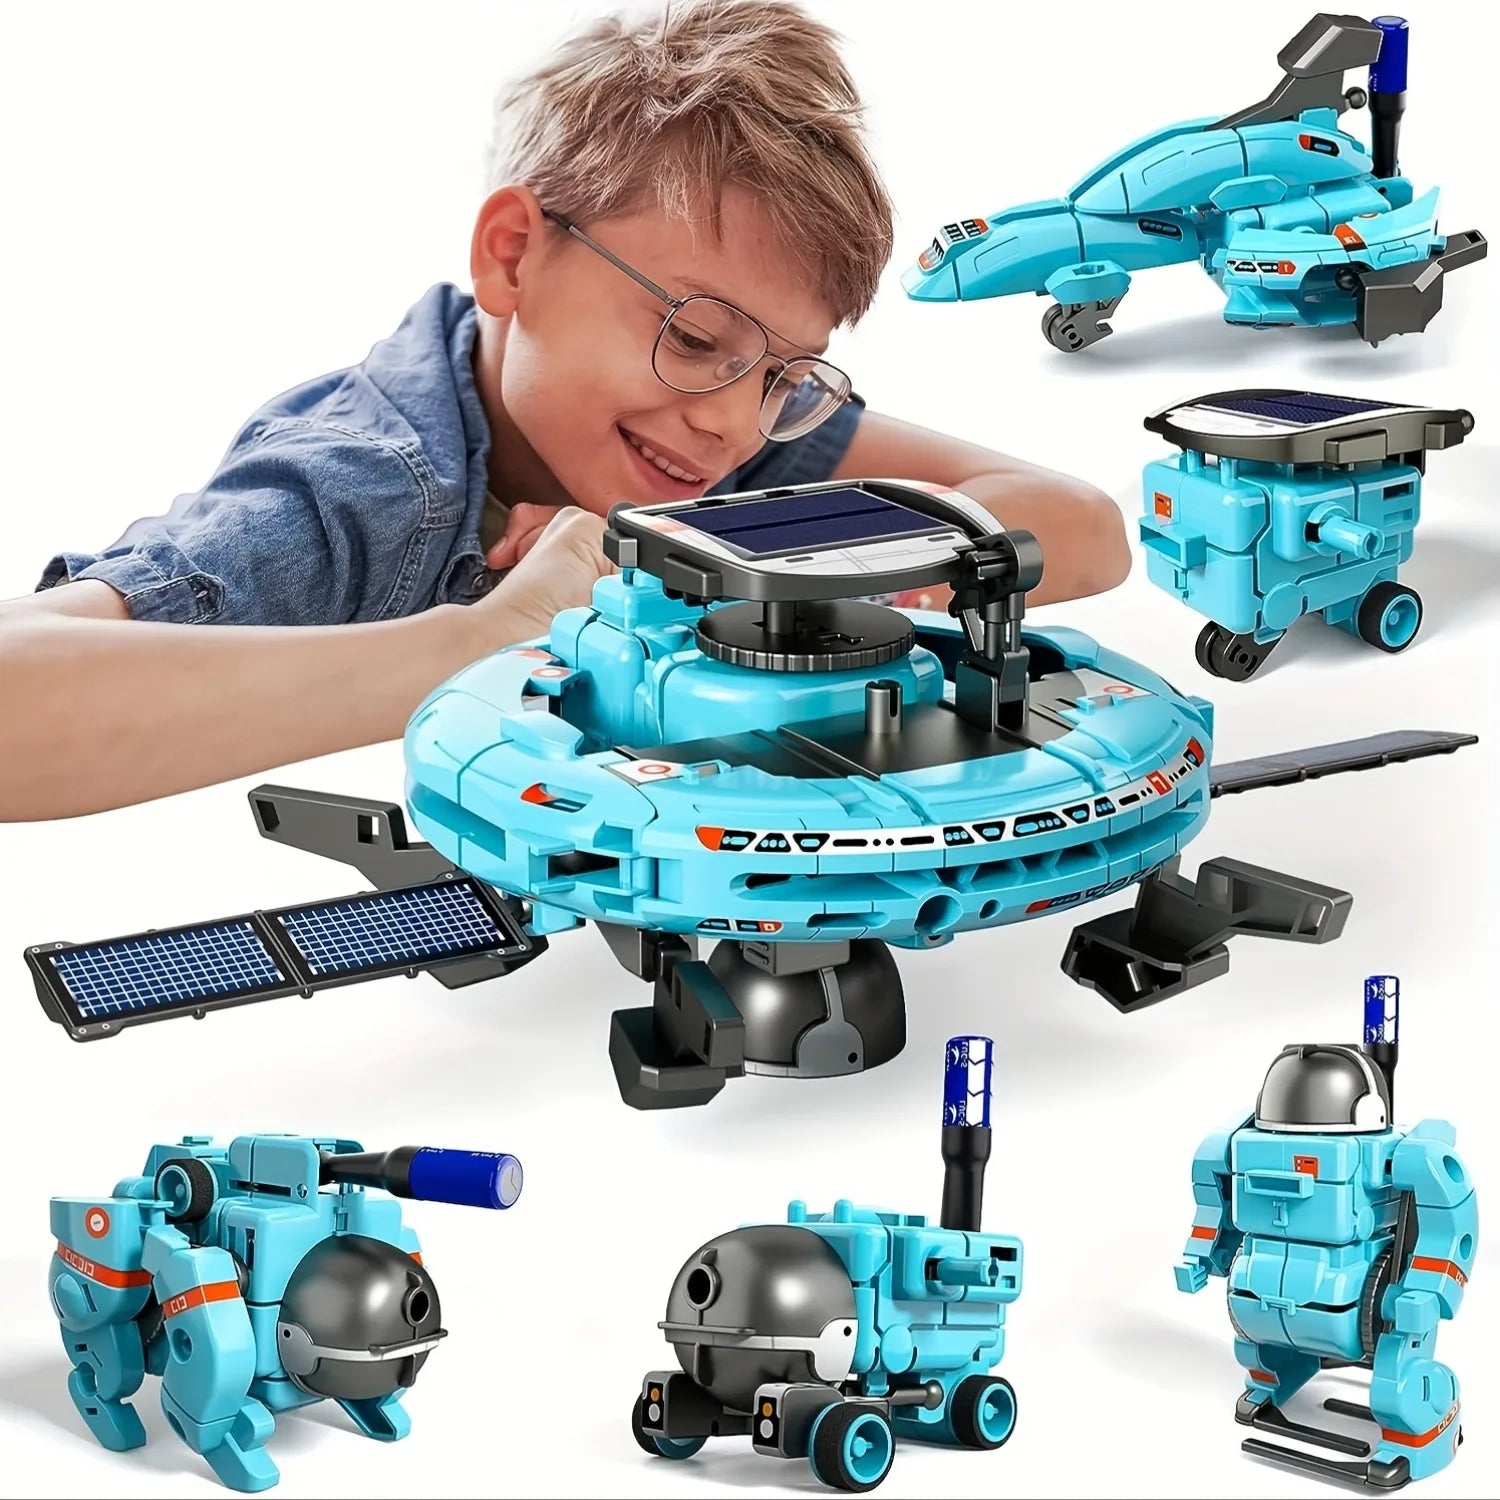 6-In-1 STEM Solar Robot Kit Toys Gifts for Kids Educational Building Science Experiment Set Birthday for Kids Boys Girls